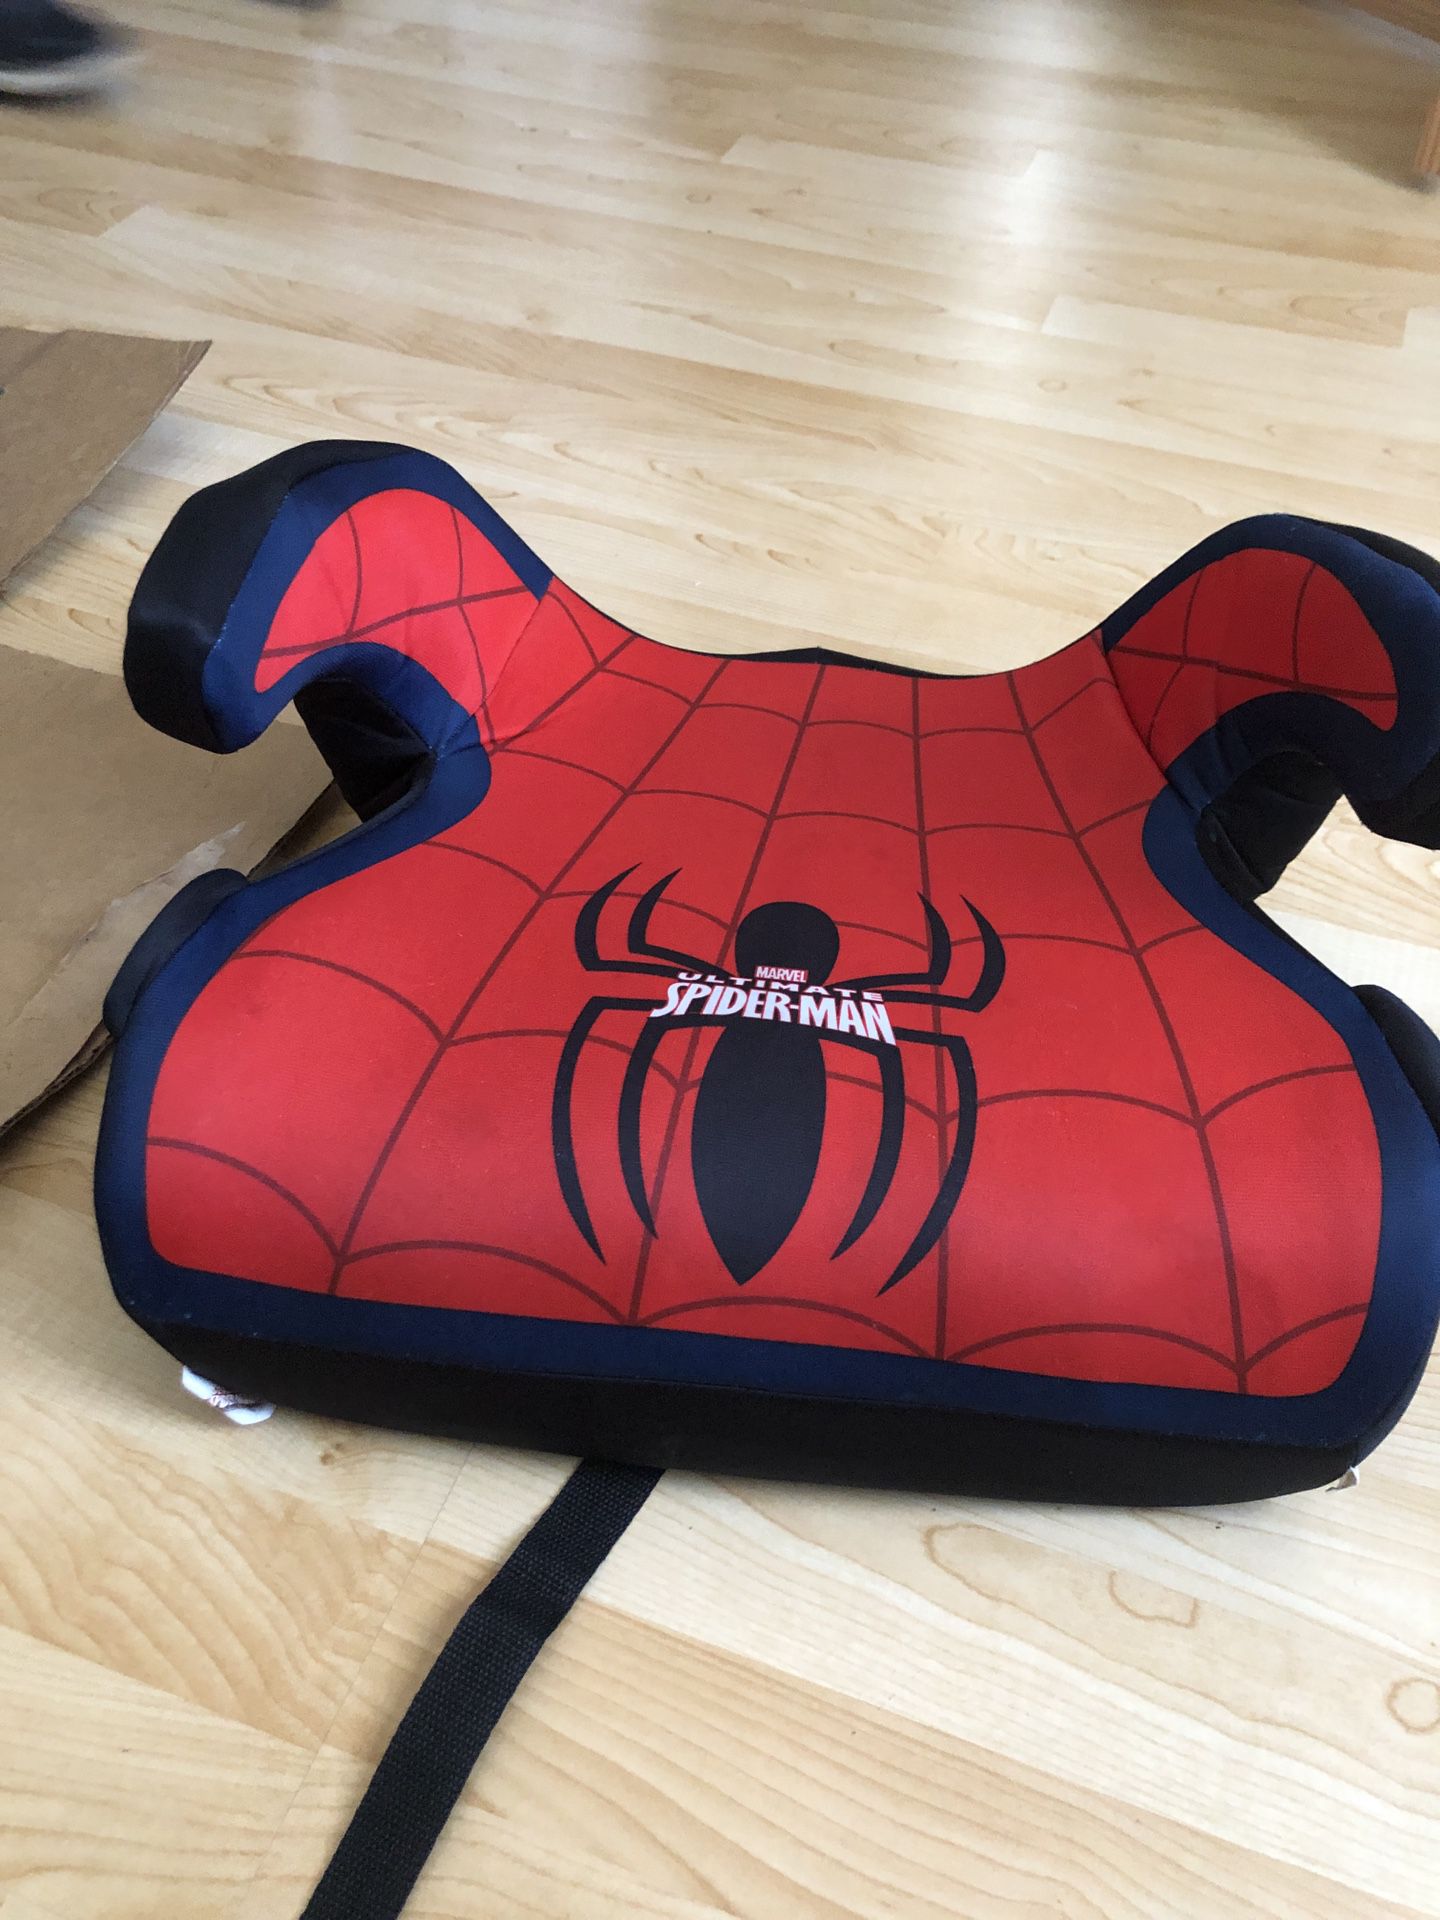 Spider-Man Booster Car Seat